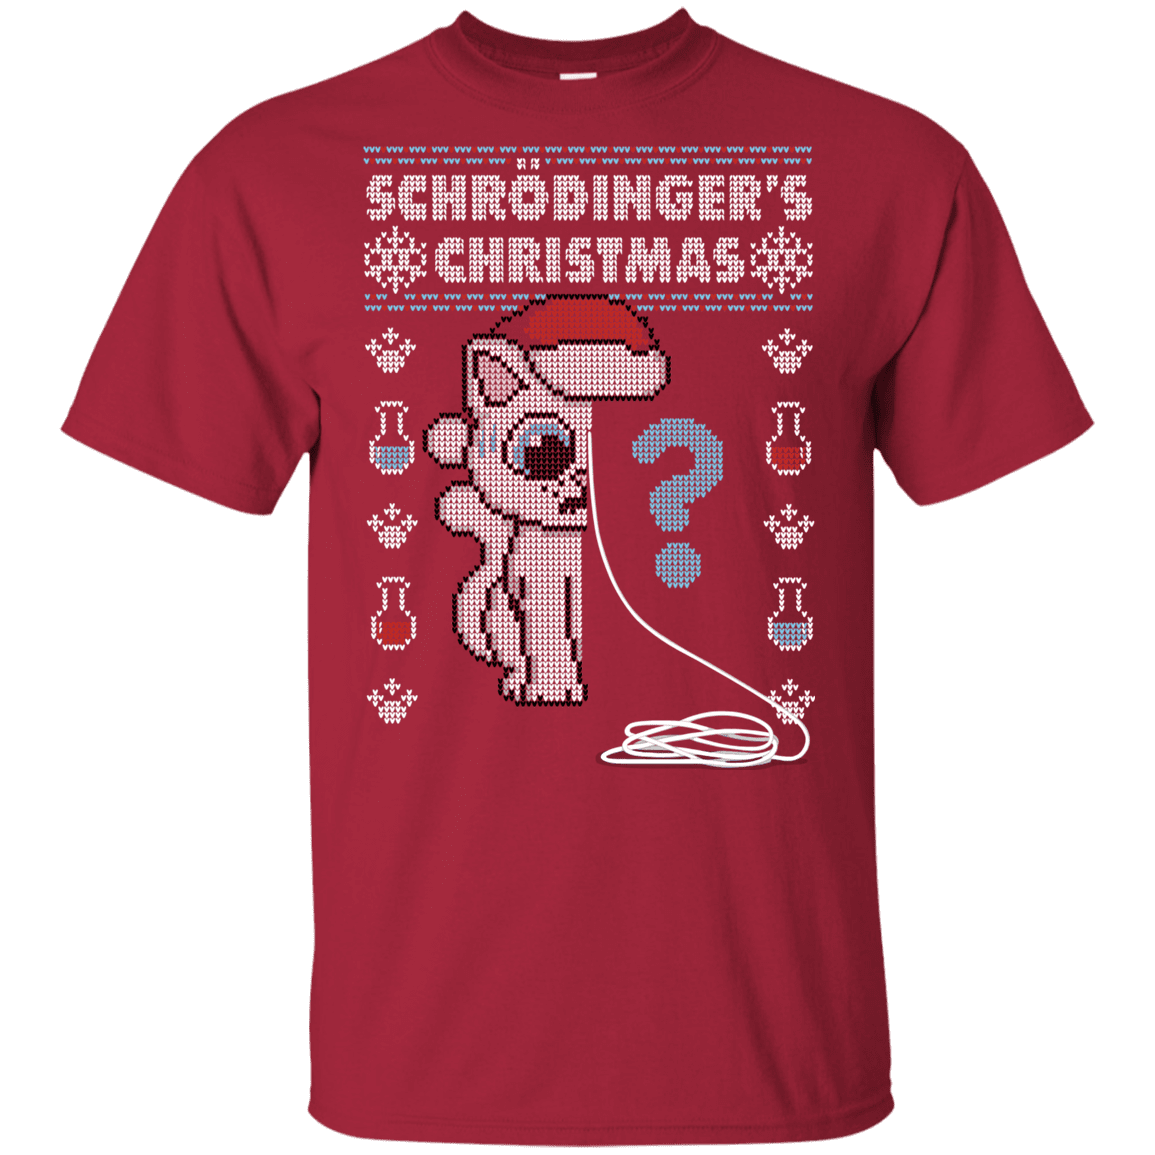 T-Shirts Cardinal / YXS Schrodingers Christmas Youth T-Shirt